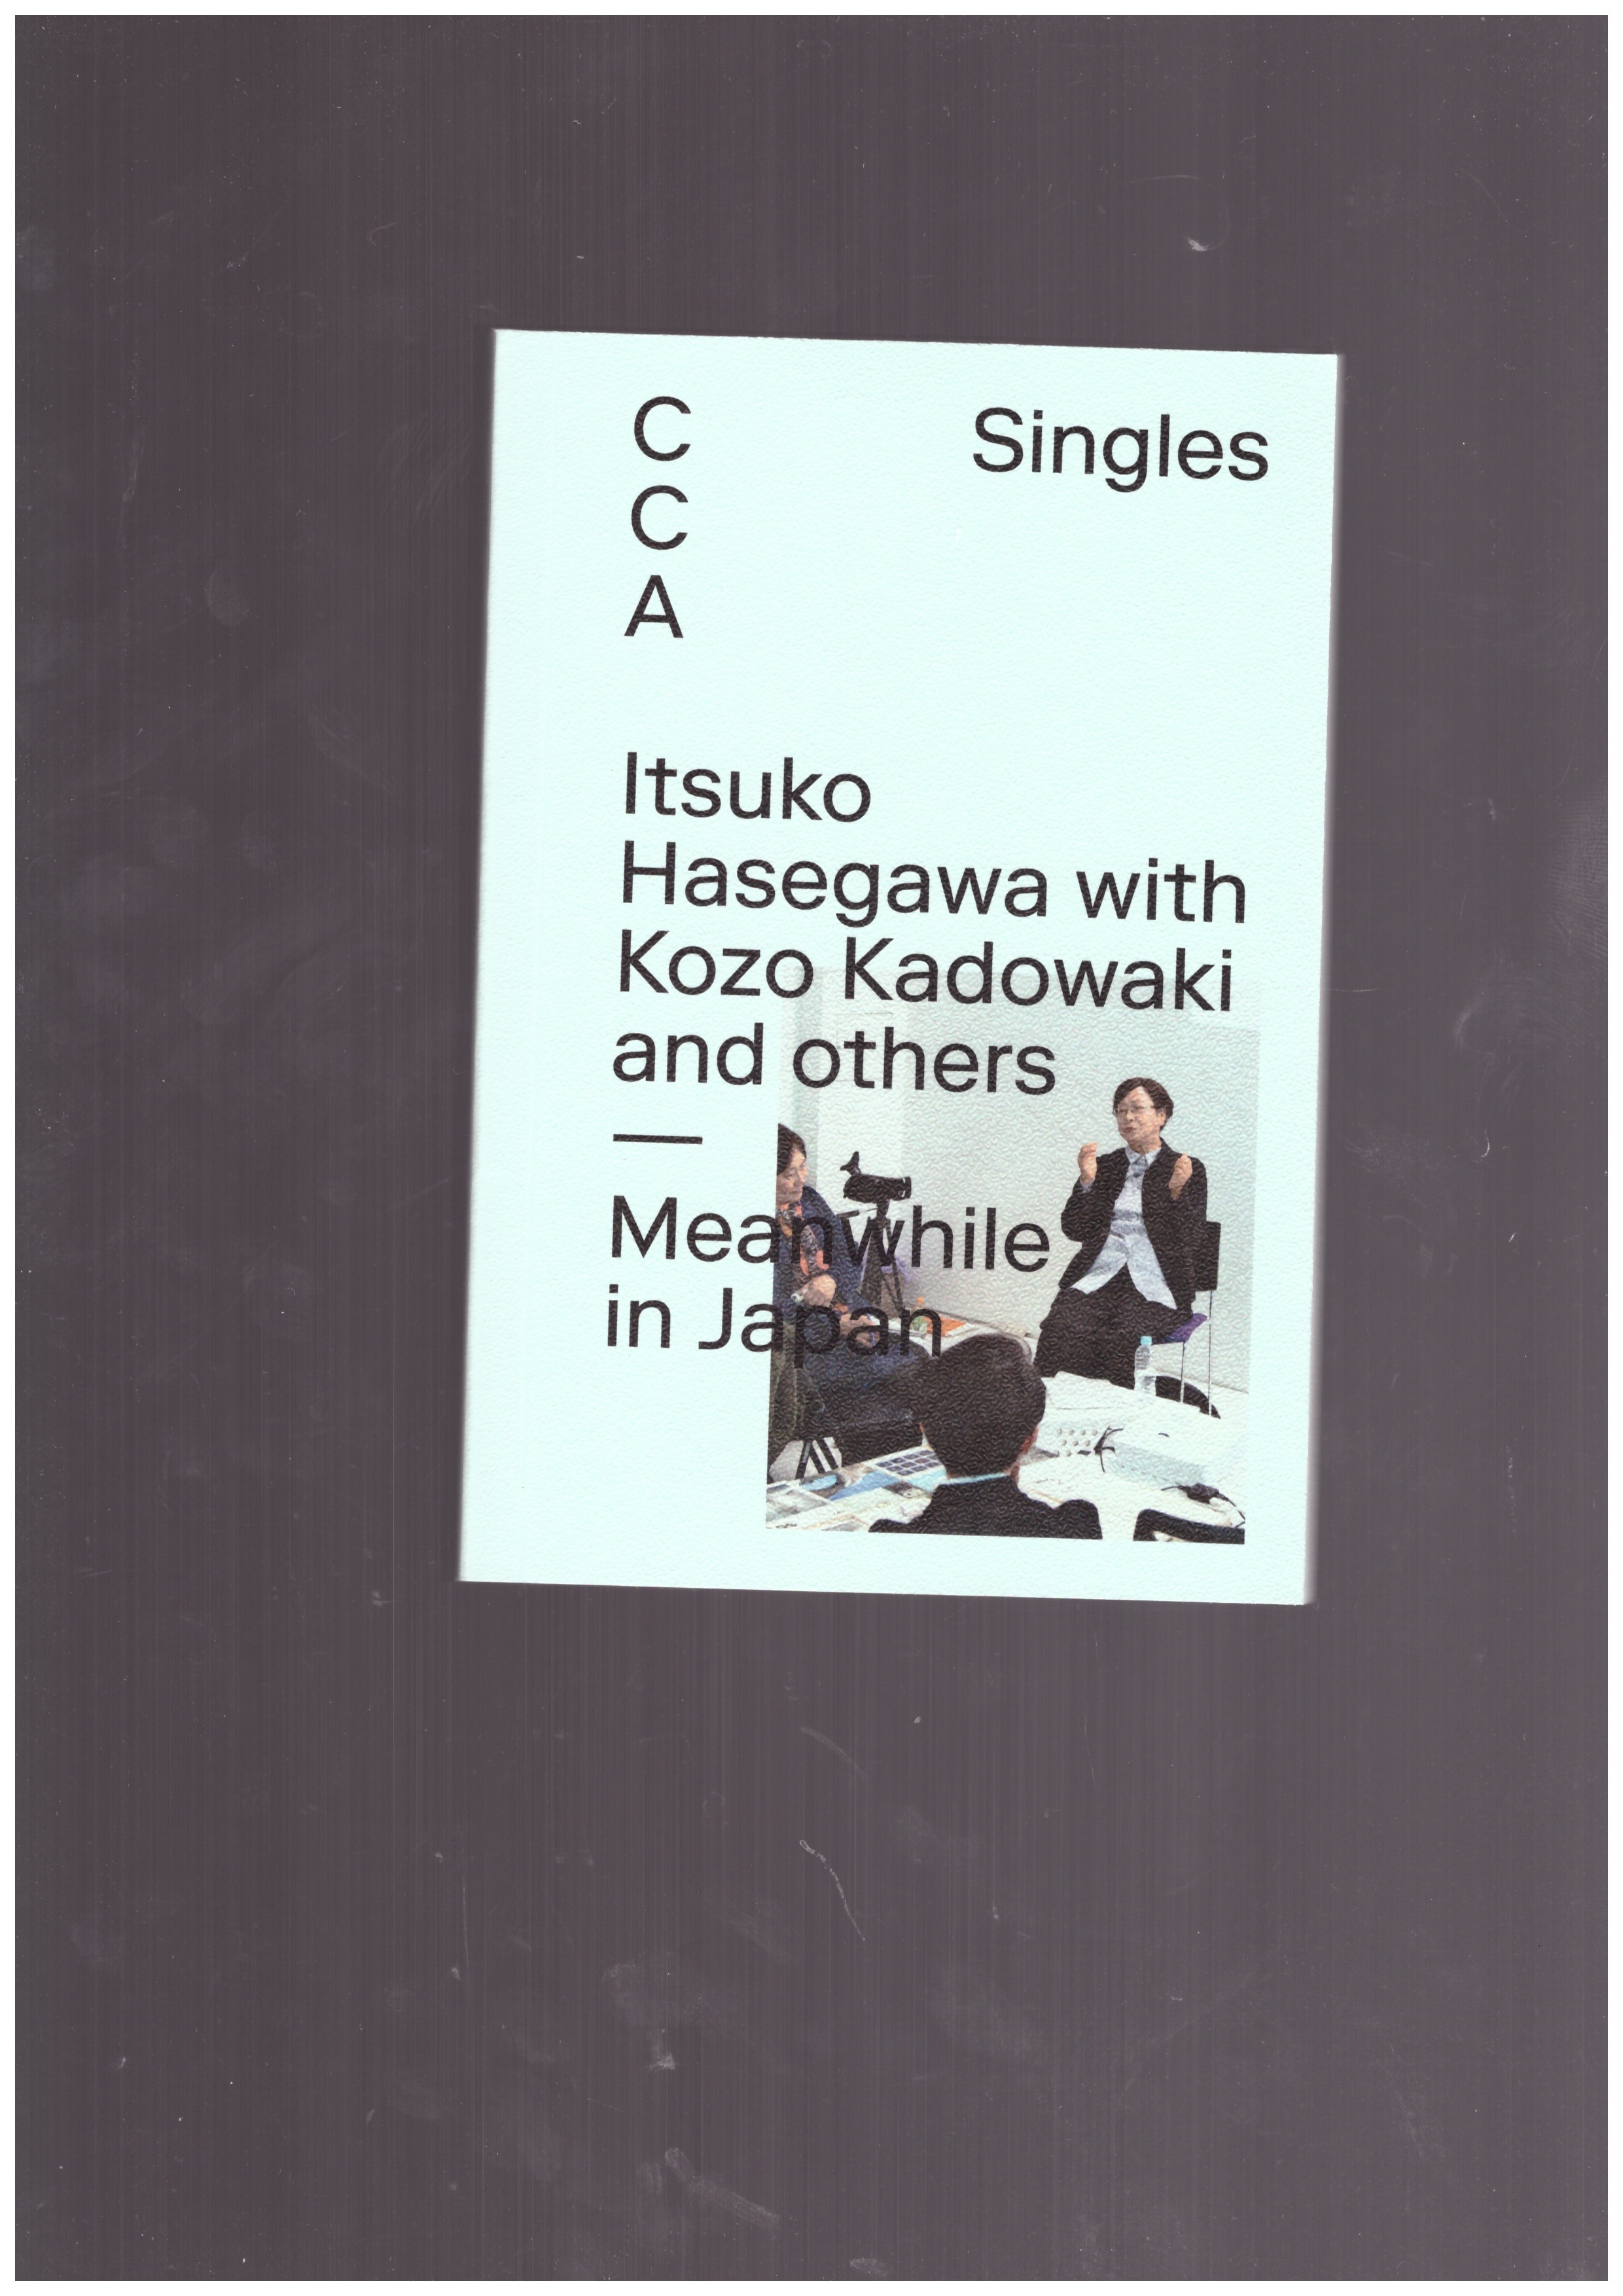 HASEGAWA, Itsuko; KADOWAKI, Kozo - CCA Singles - Meanwhile in Japan